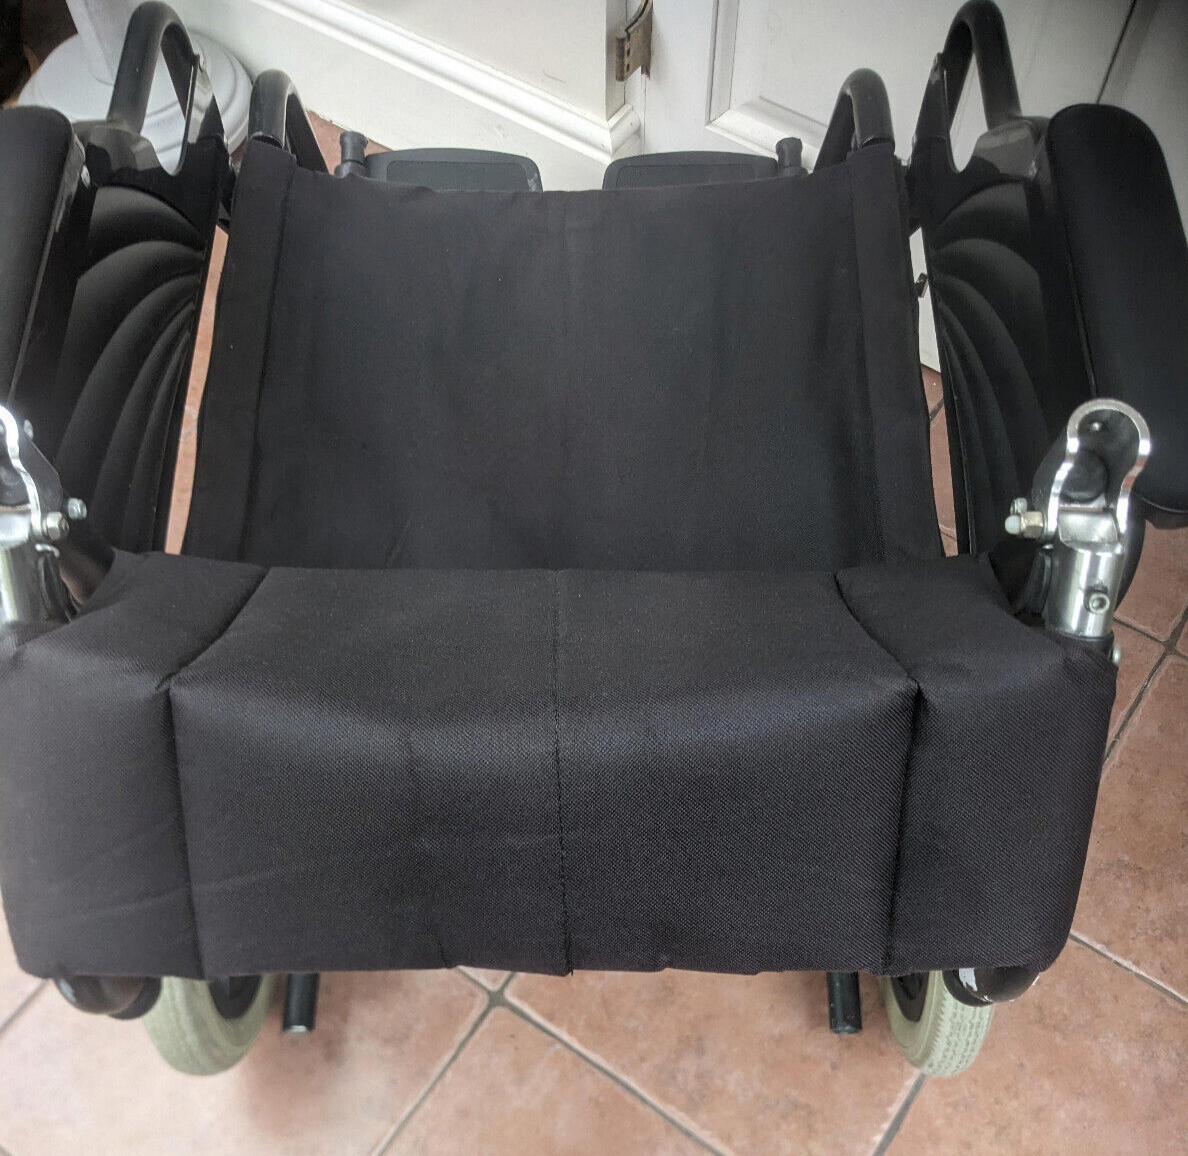 I-Go Flyte 90 Transit Wheelchair - Black foldable